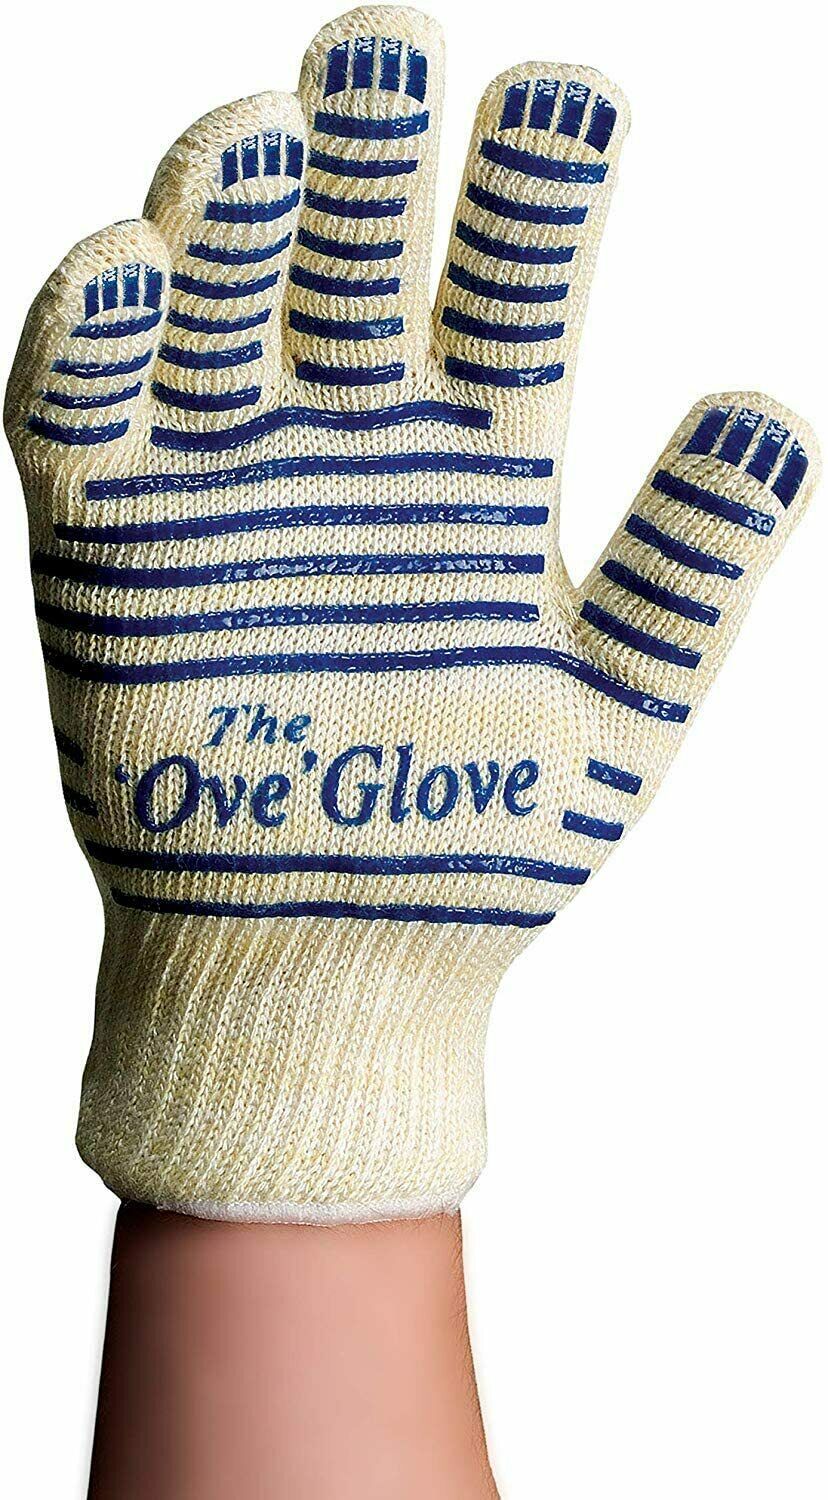 Ove Glove Hand Anti Heat Flame Blue 540f Non-slip Silicone Grip